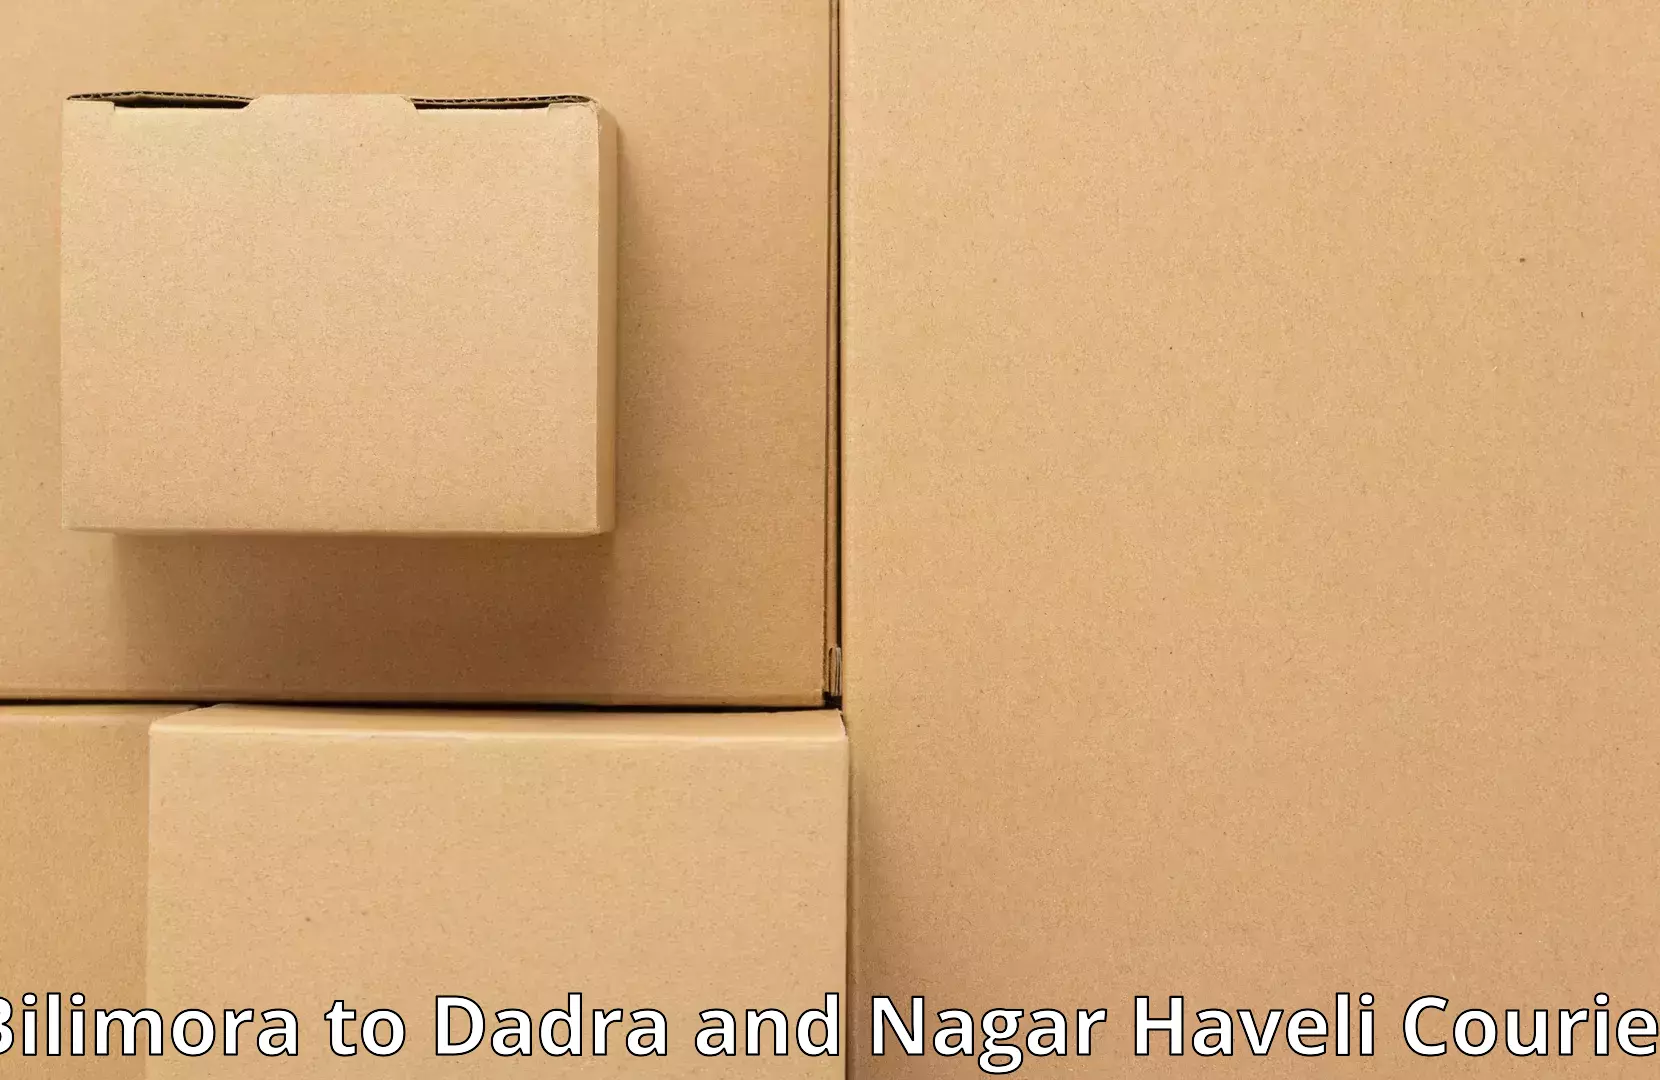 Moving and packing experts Bilimora to Dadra and Nagar Haveli